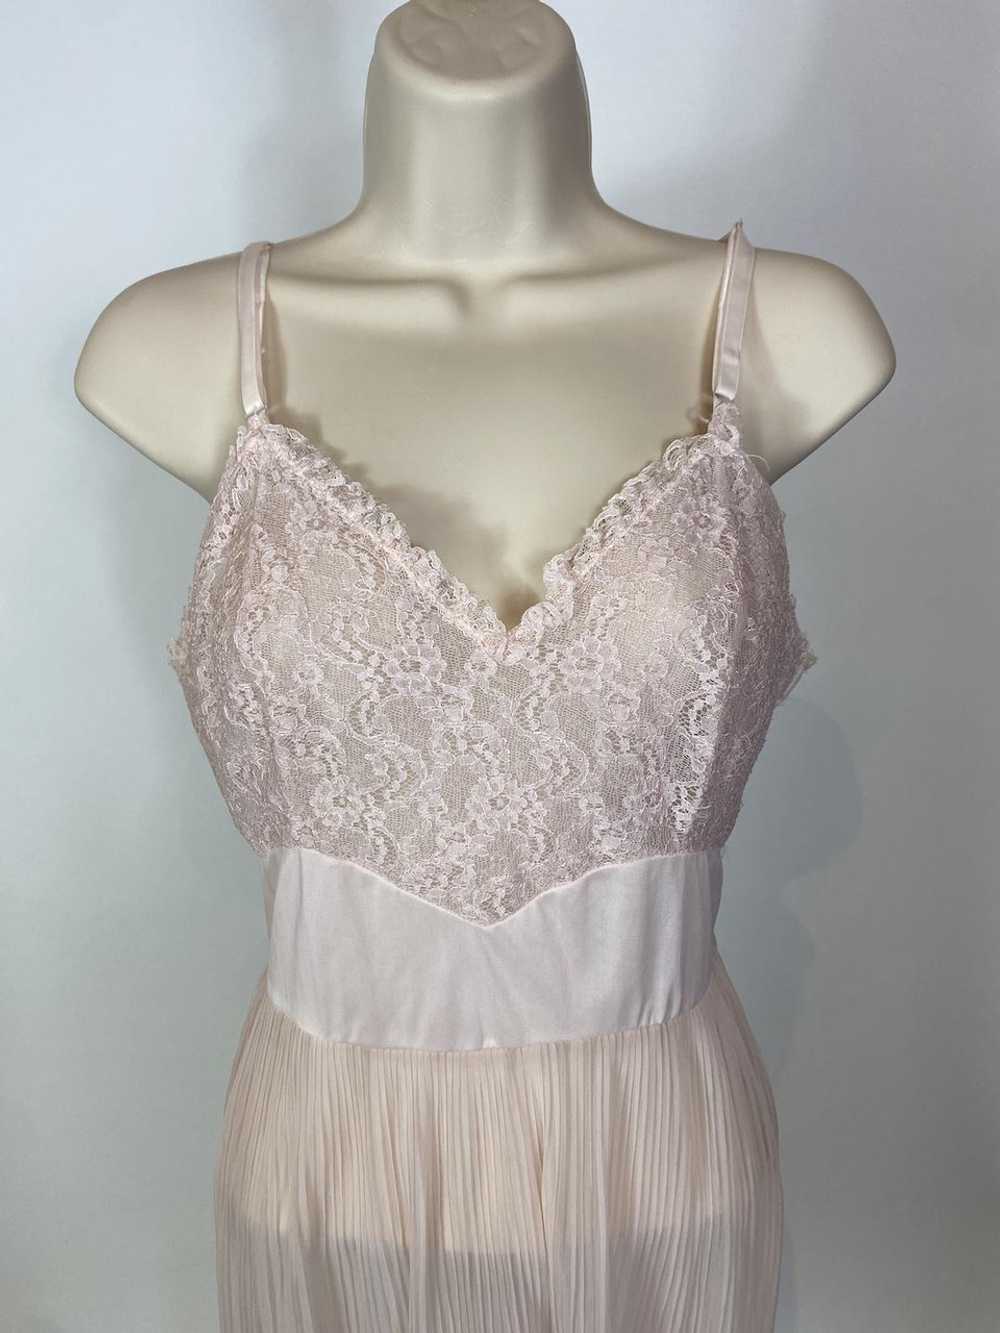 1960s Slip Dress Pale Pink Sheer Lace - image 2